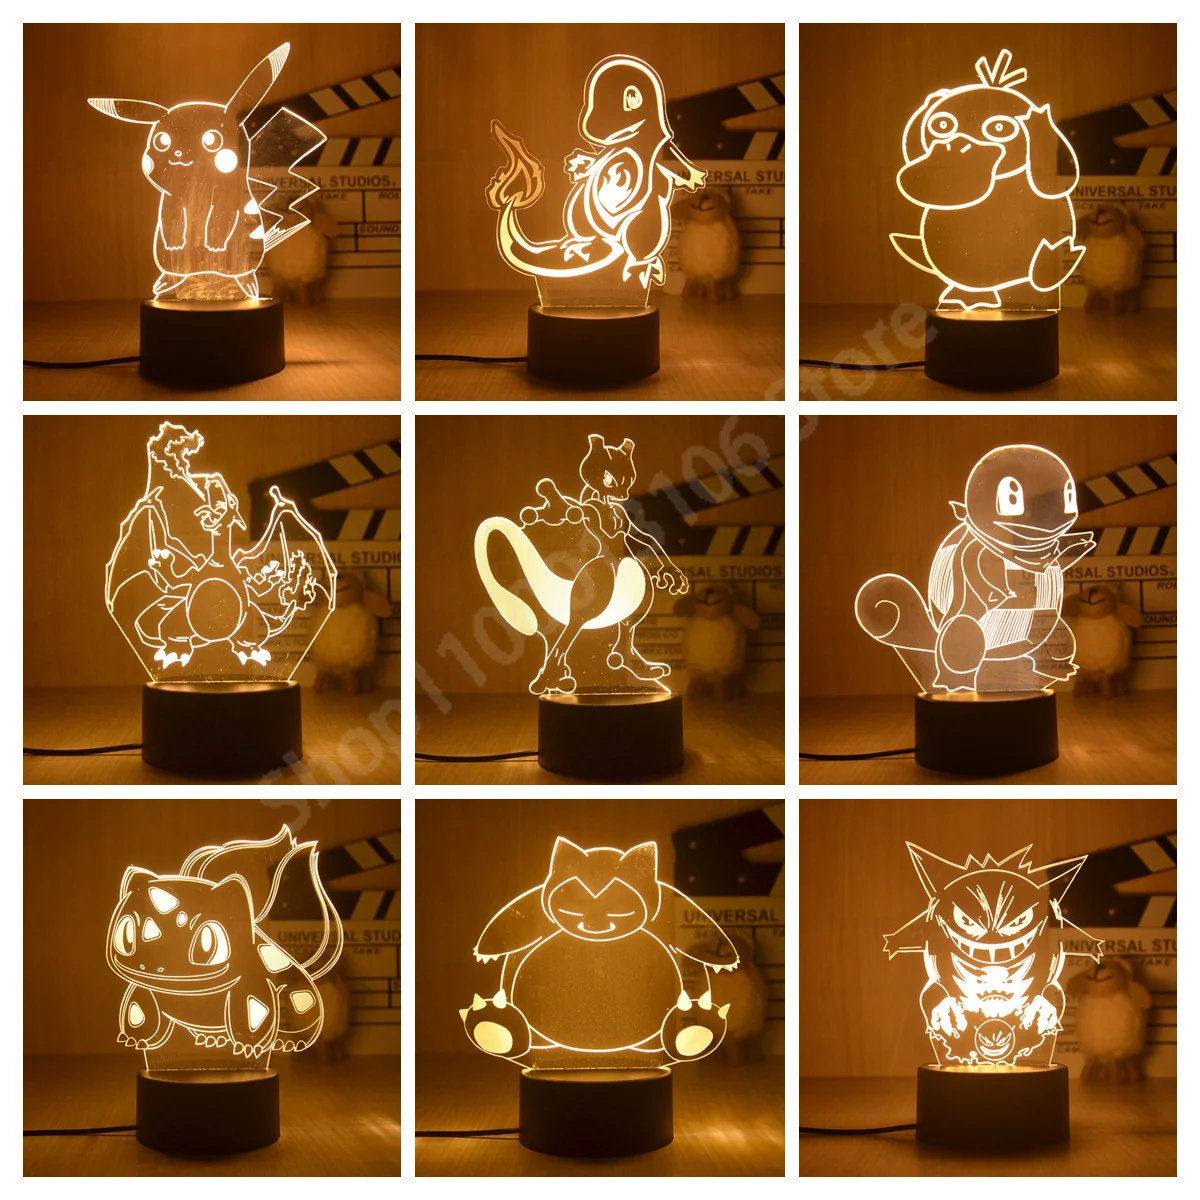 Купи Cute Pokemon Pikachu Anime Figures 3D Led Night Light Model Toys Children Bed Room Decor Birthday Gift Christmas Gifts for Kids за 137 рублей в магазине AliExpress